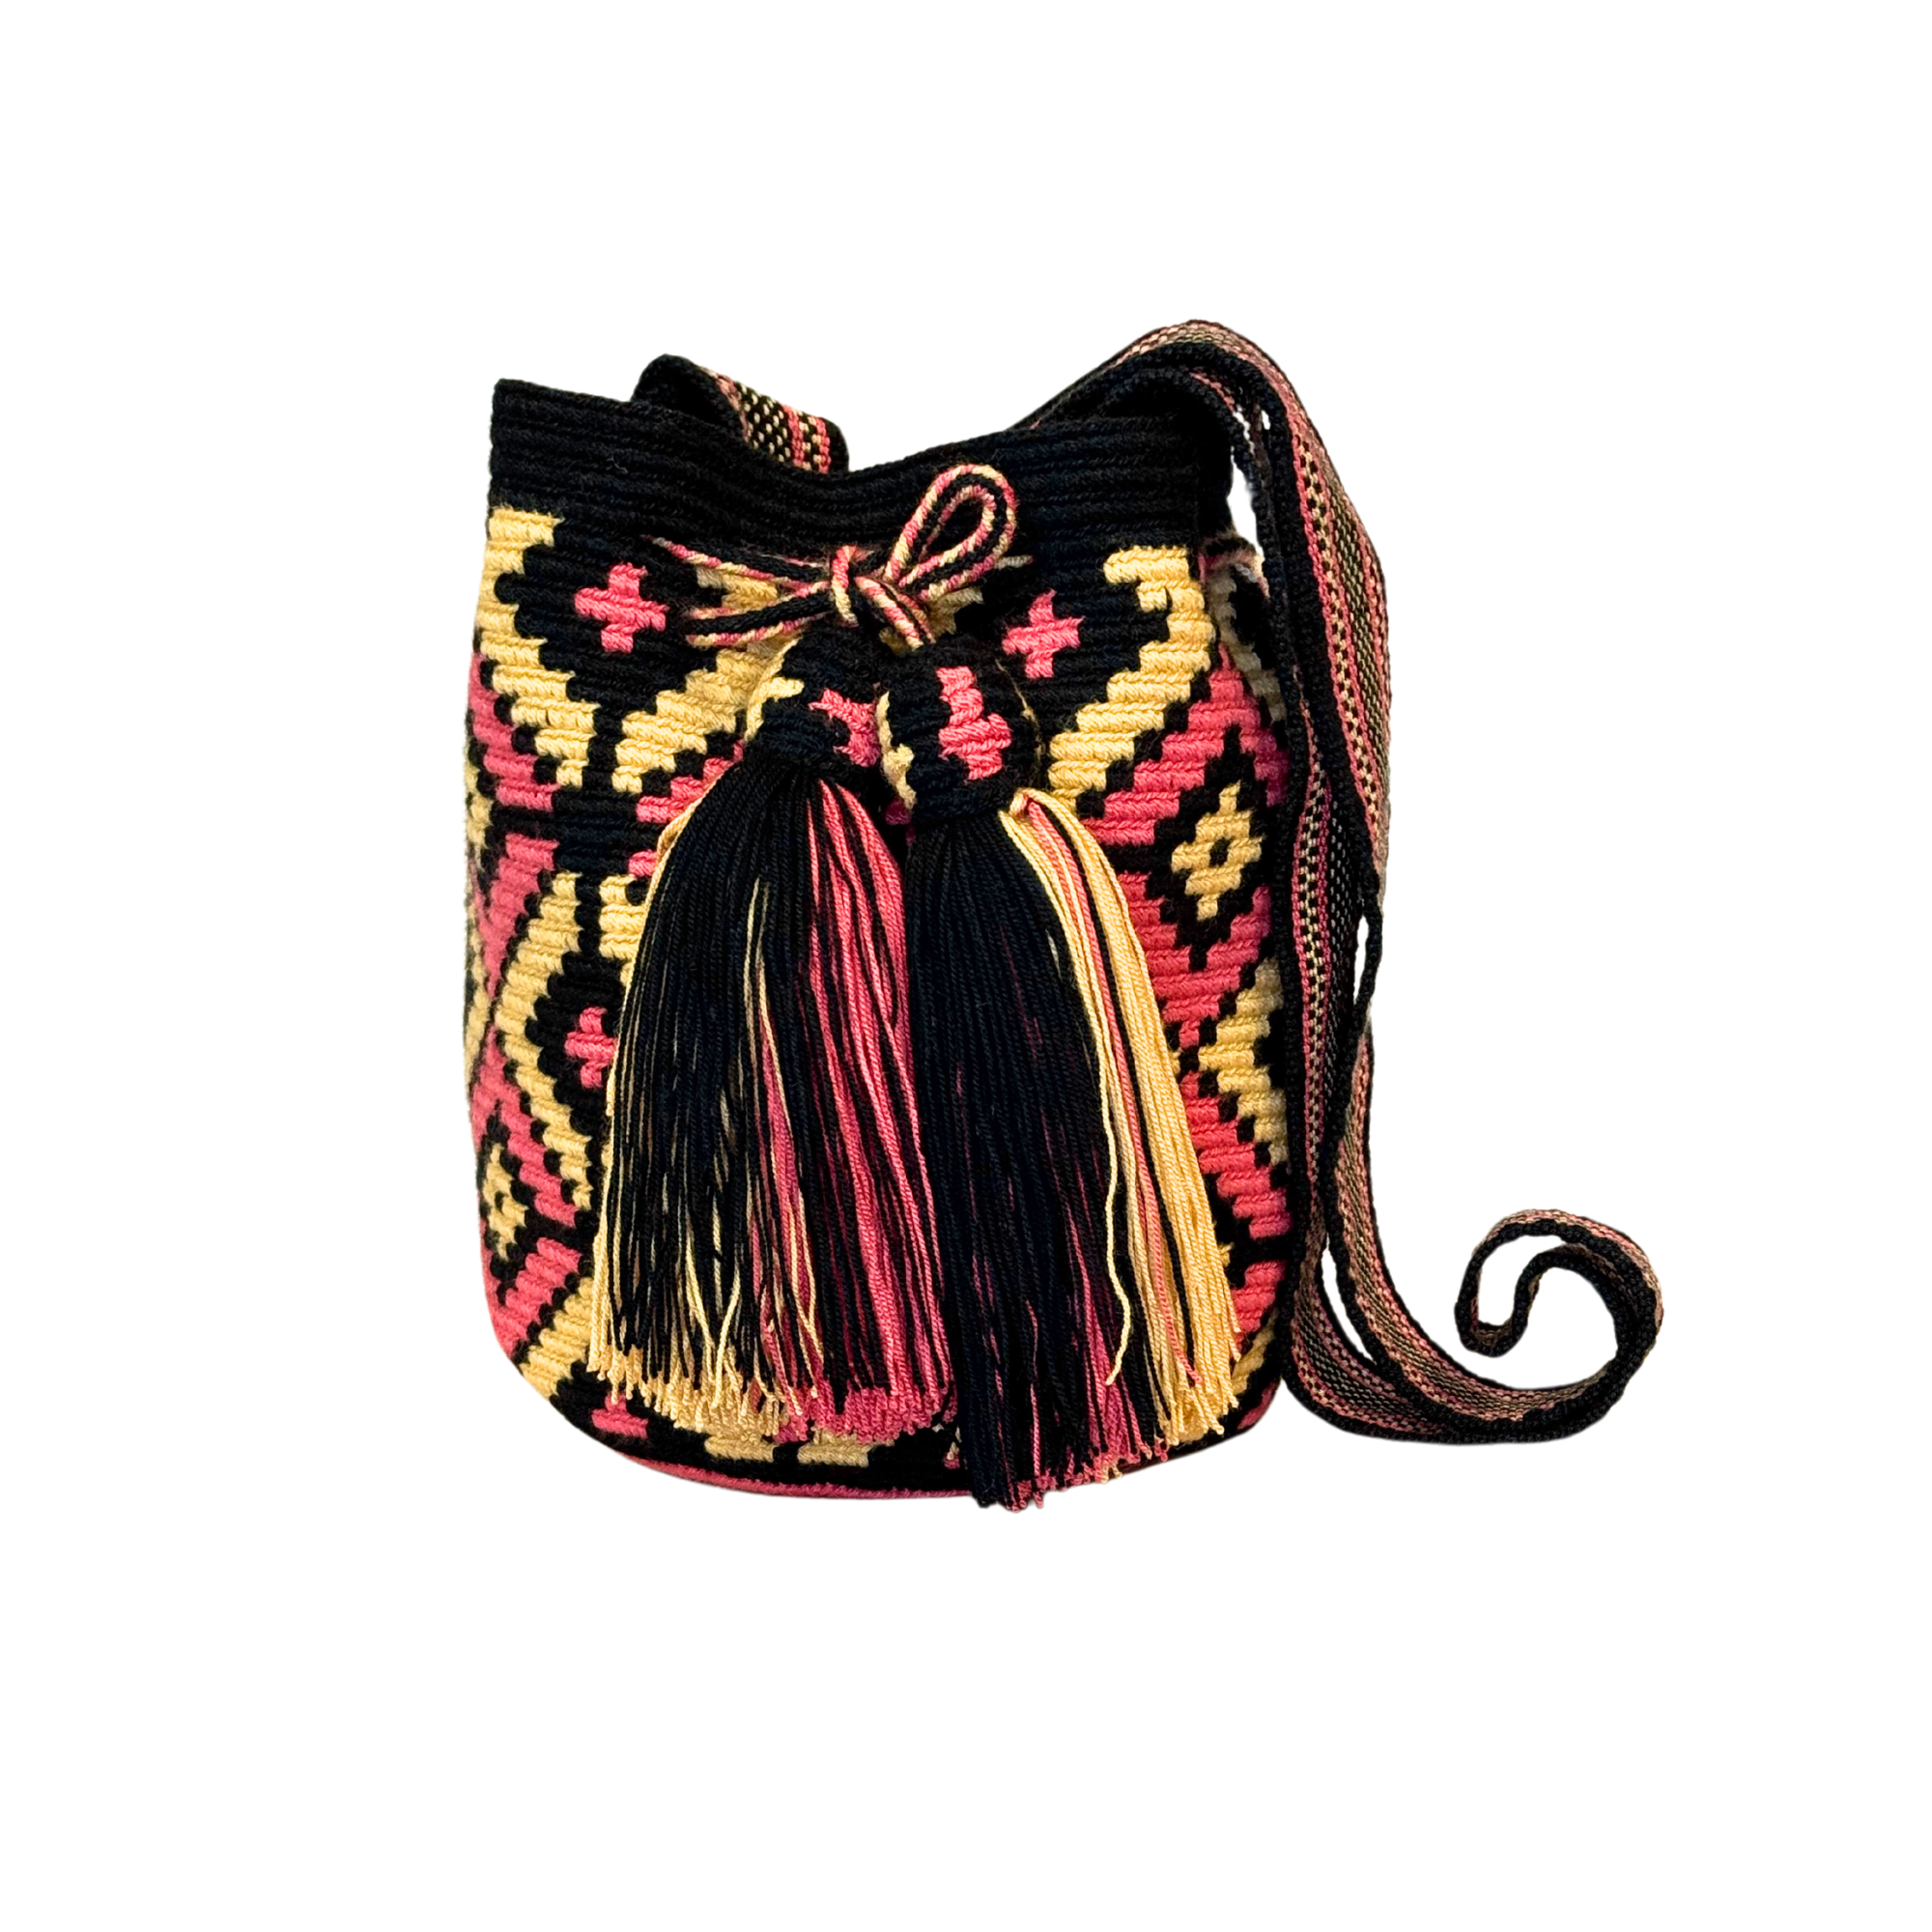 Exclusive Wayuu mochila bag | Medium Woven Crossbody Handmade Gorrito Mochila | Pink, beige and black rhombus solid strap